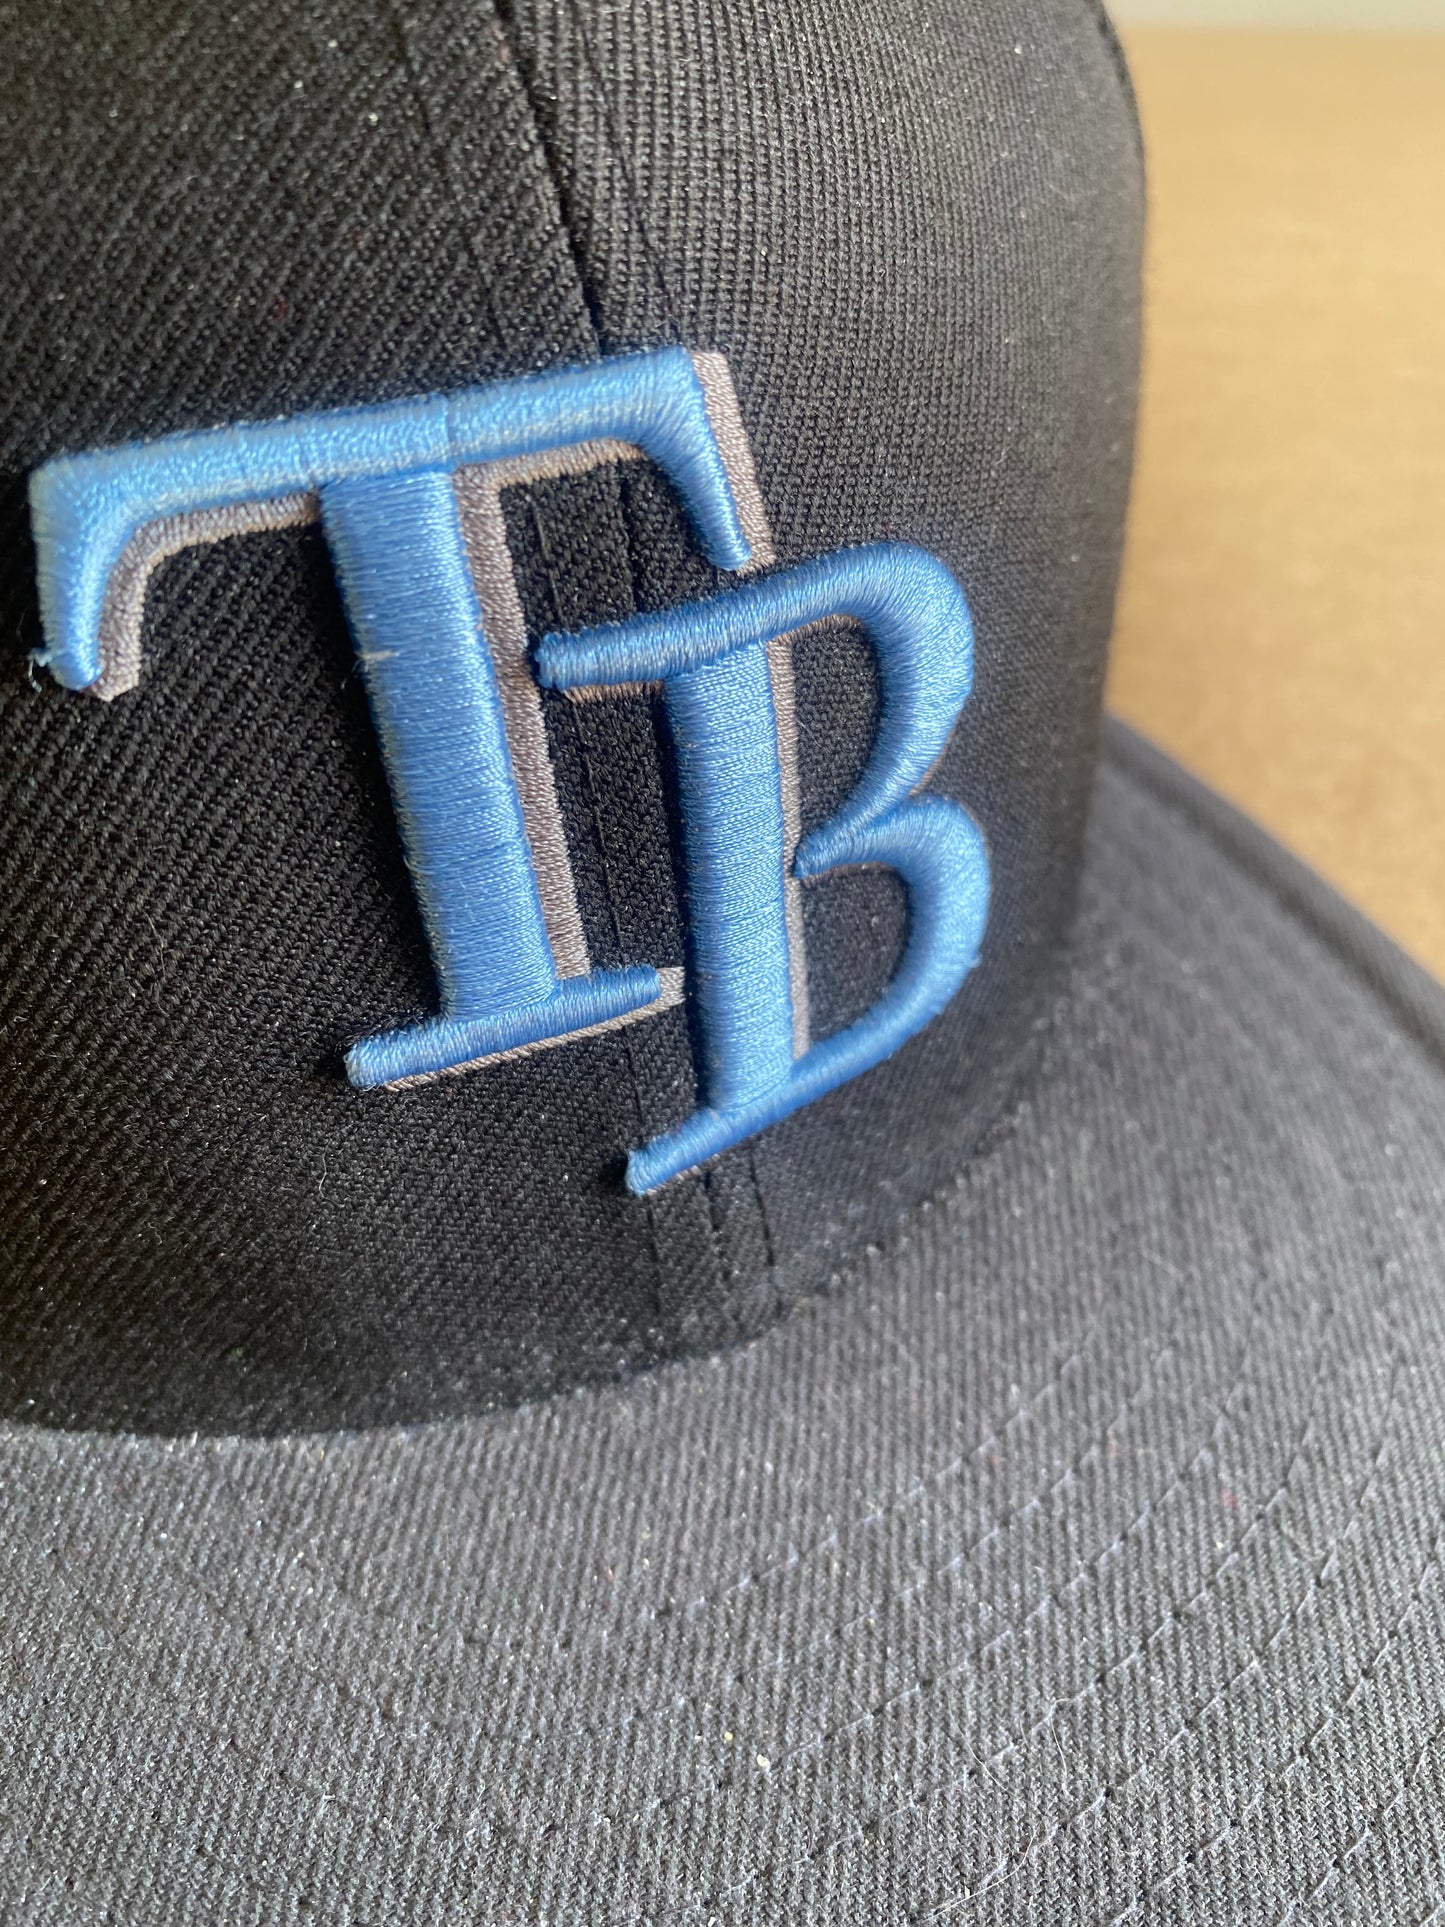 Secondhand New Era Tampa Bay Rays Hat